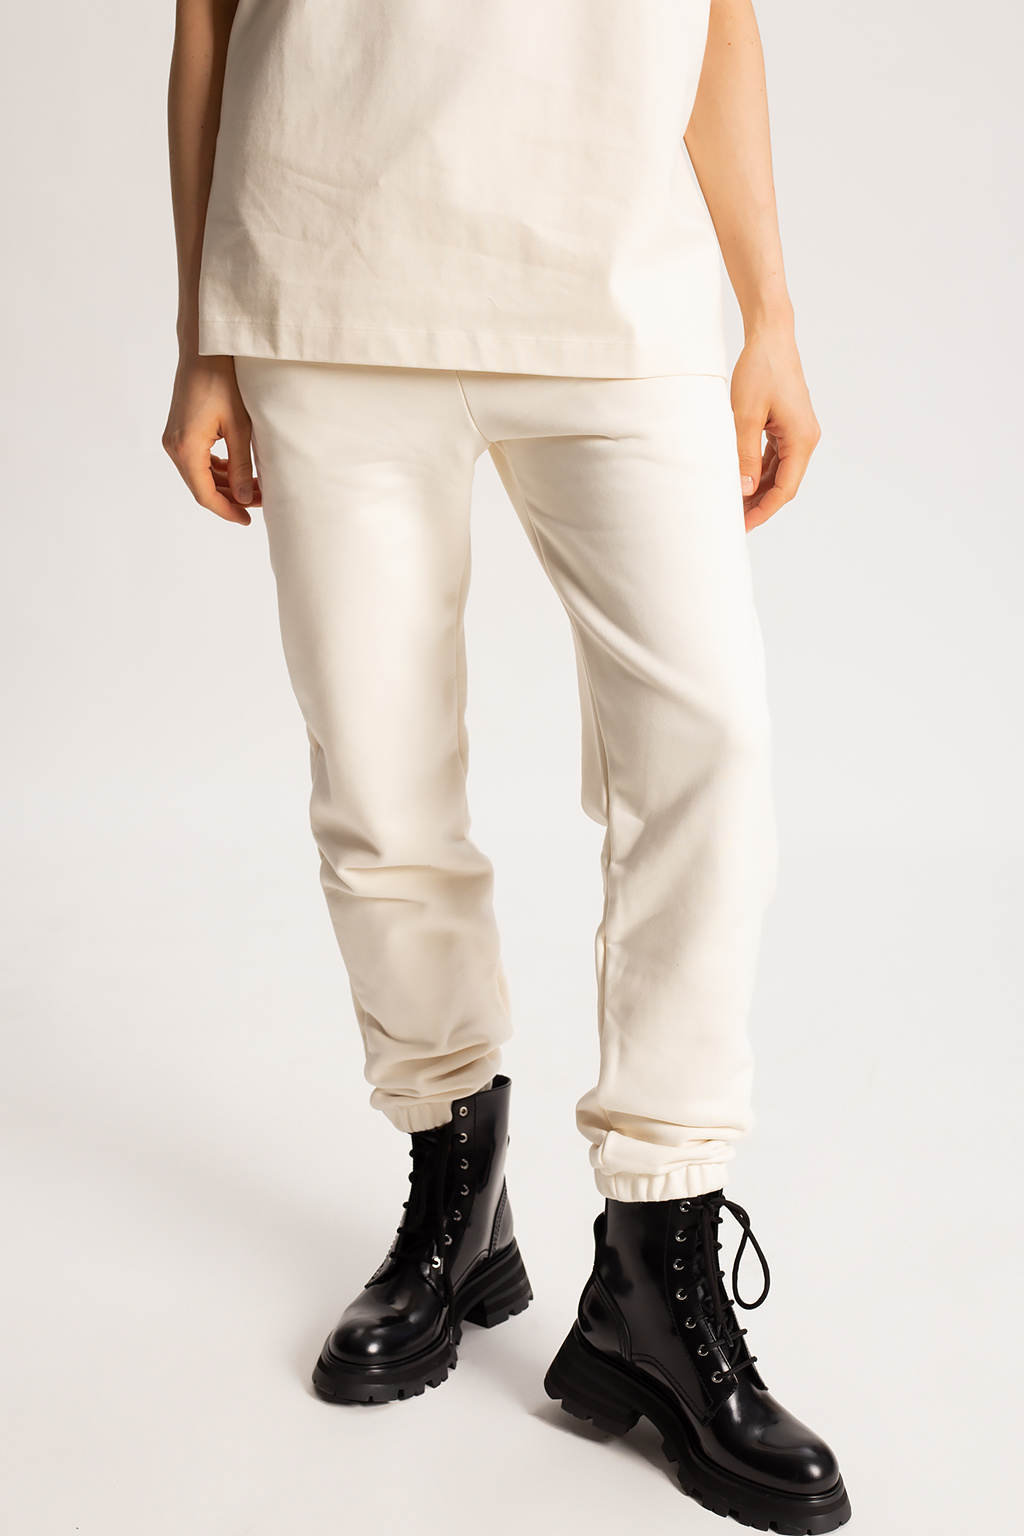 Sams\u00f8e & sams\u00f8e Sweat Pants white-primrose simple style Fashion Trousers Sweat Pants Samsøe & samsøe 